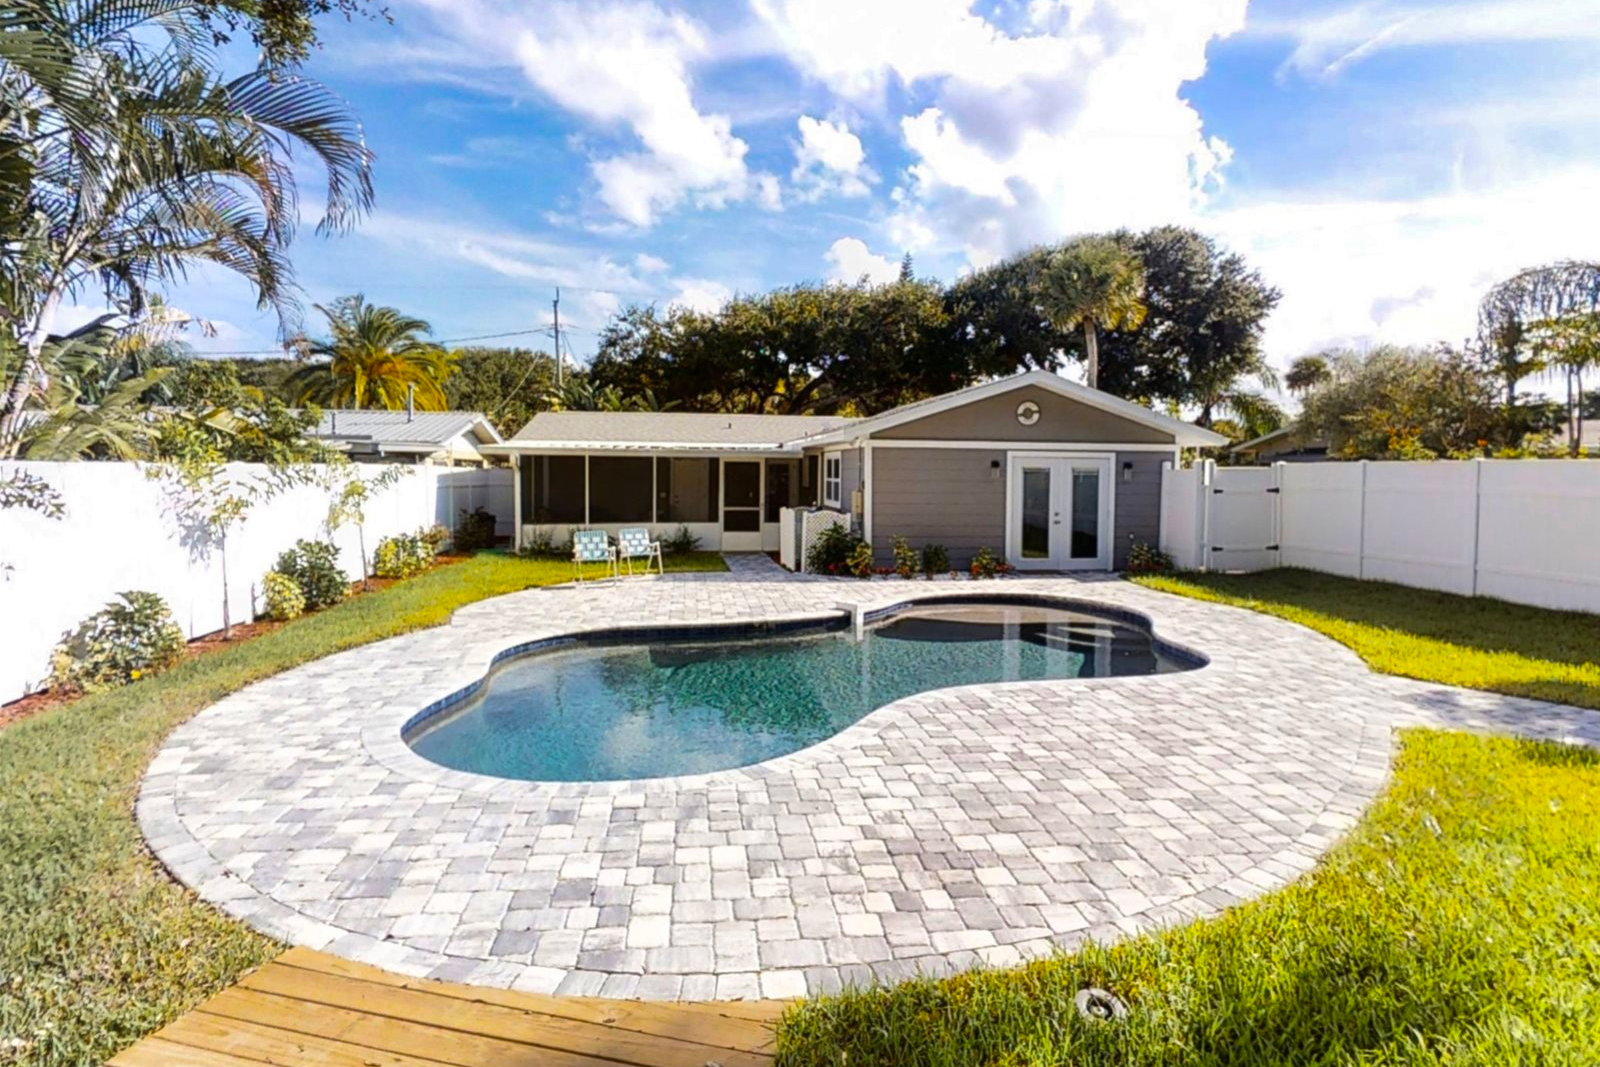 New Smyrna Beach Florida Rental Home